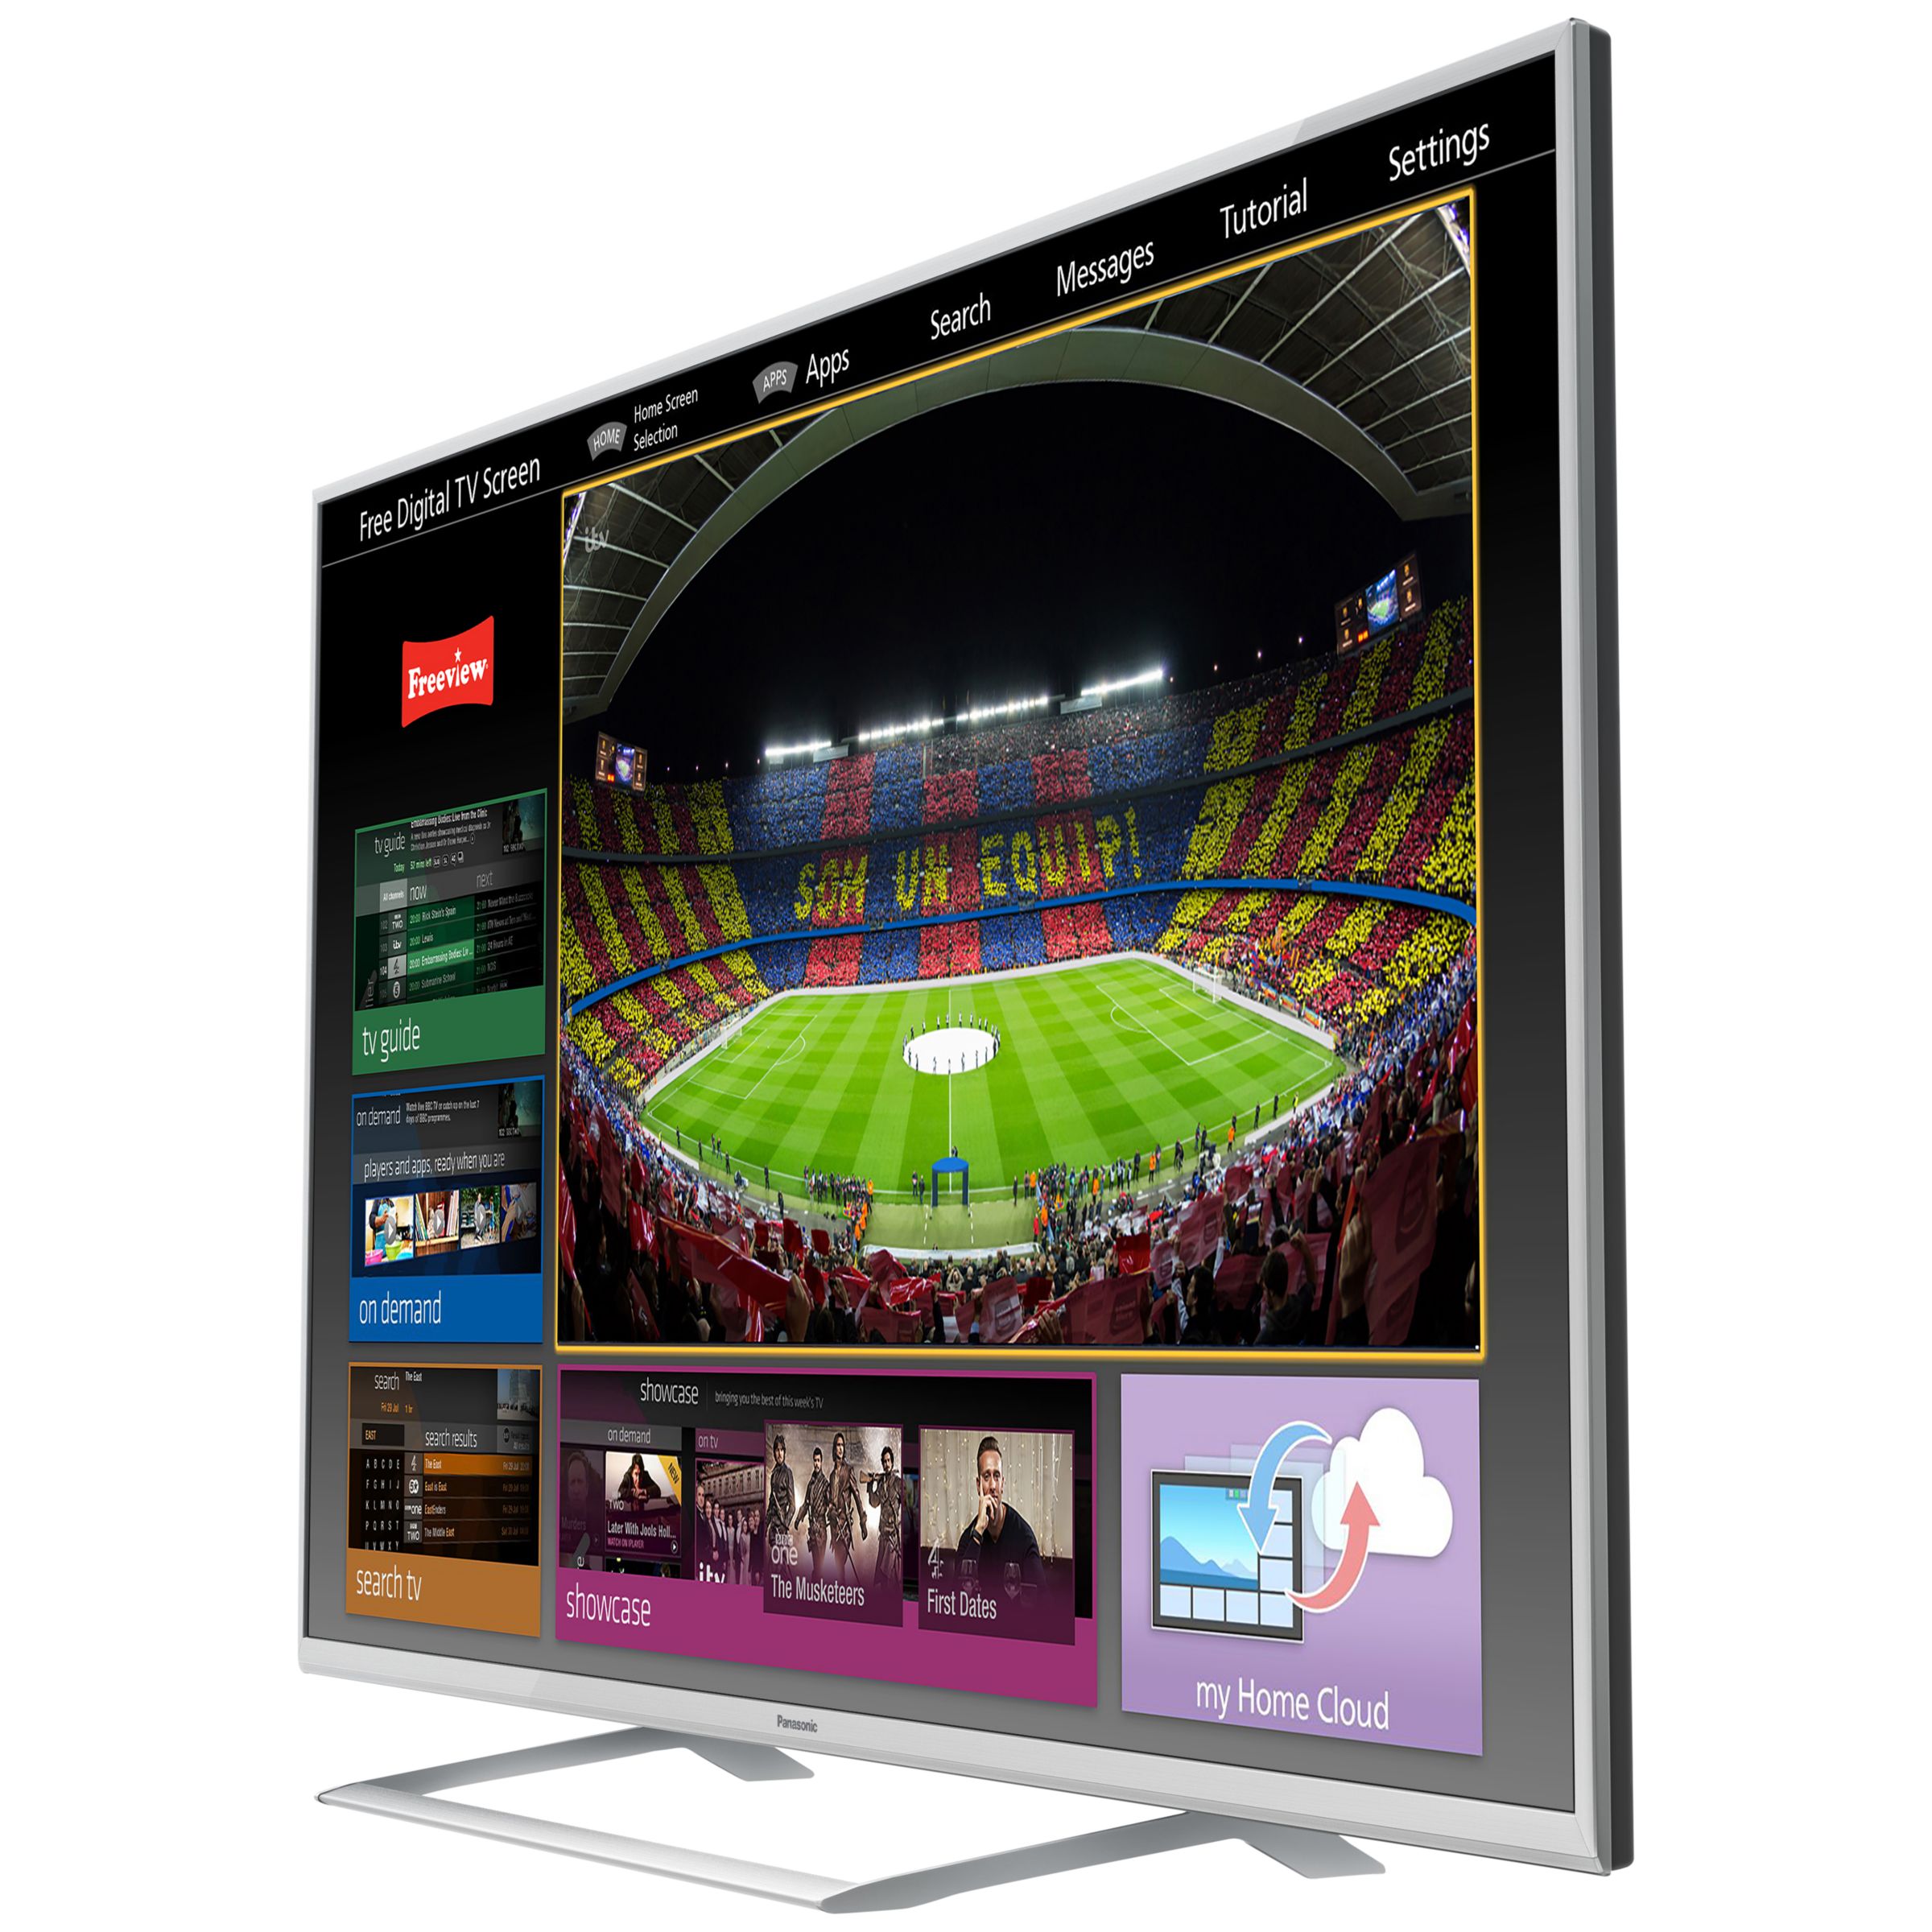 Panasonic Viera TX-42AS740 LED HD 1080p 3D Smart TV, 42